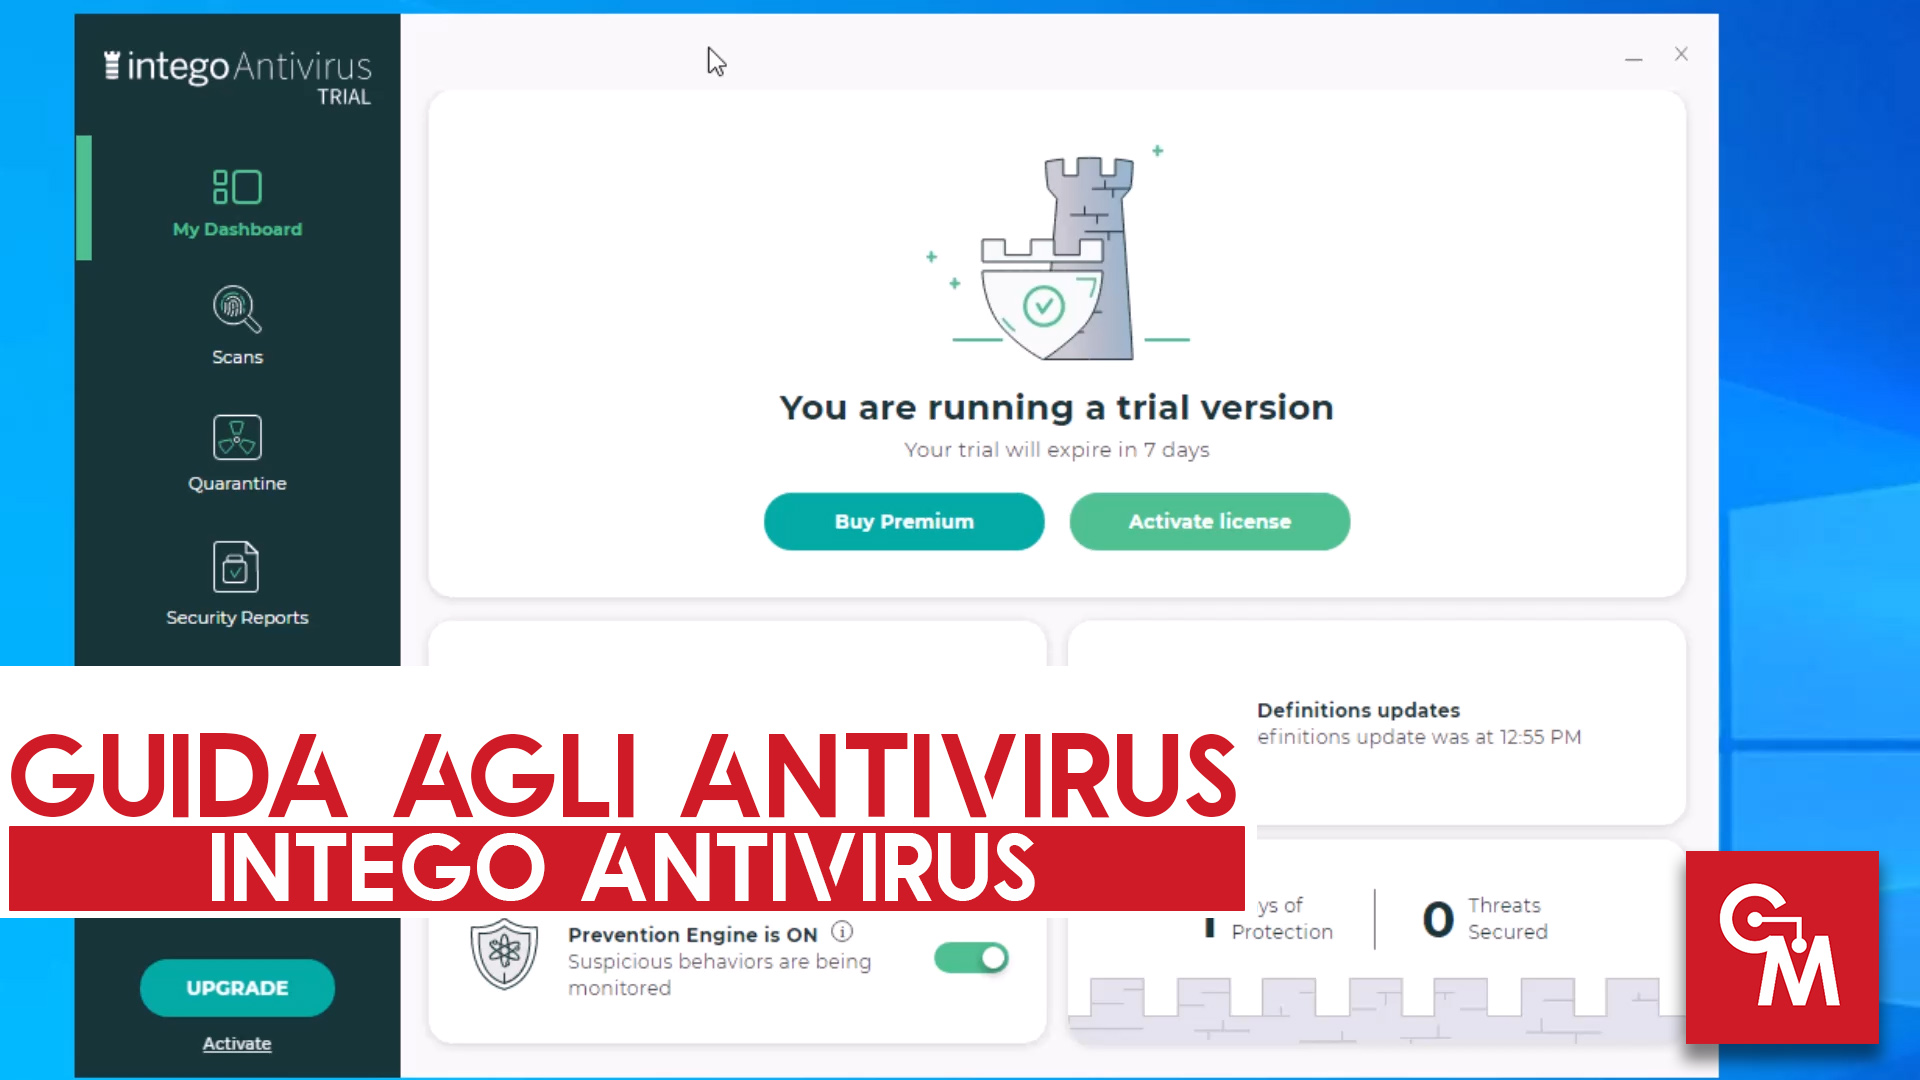 Guida Agli Antivirus | Intego Antivirus